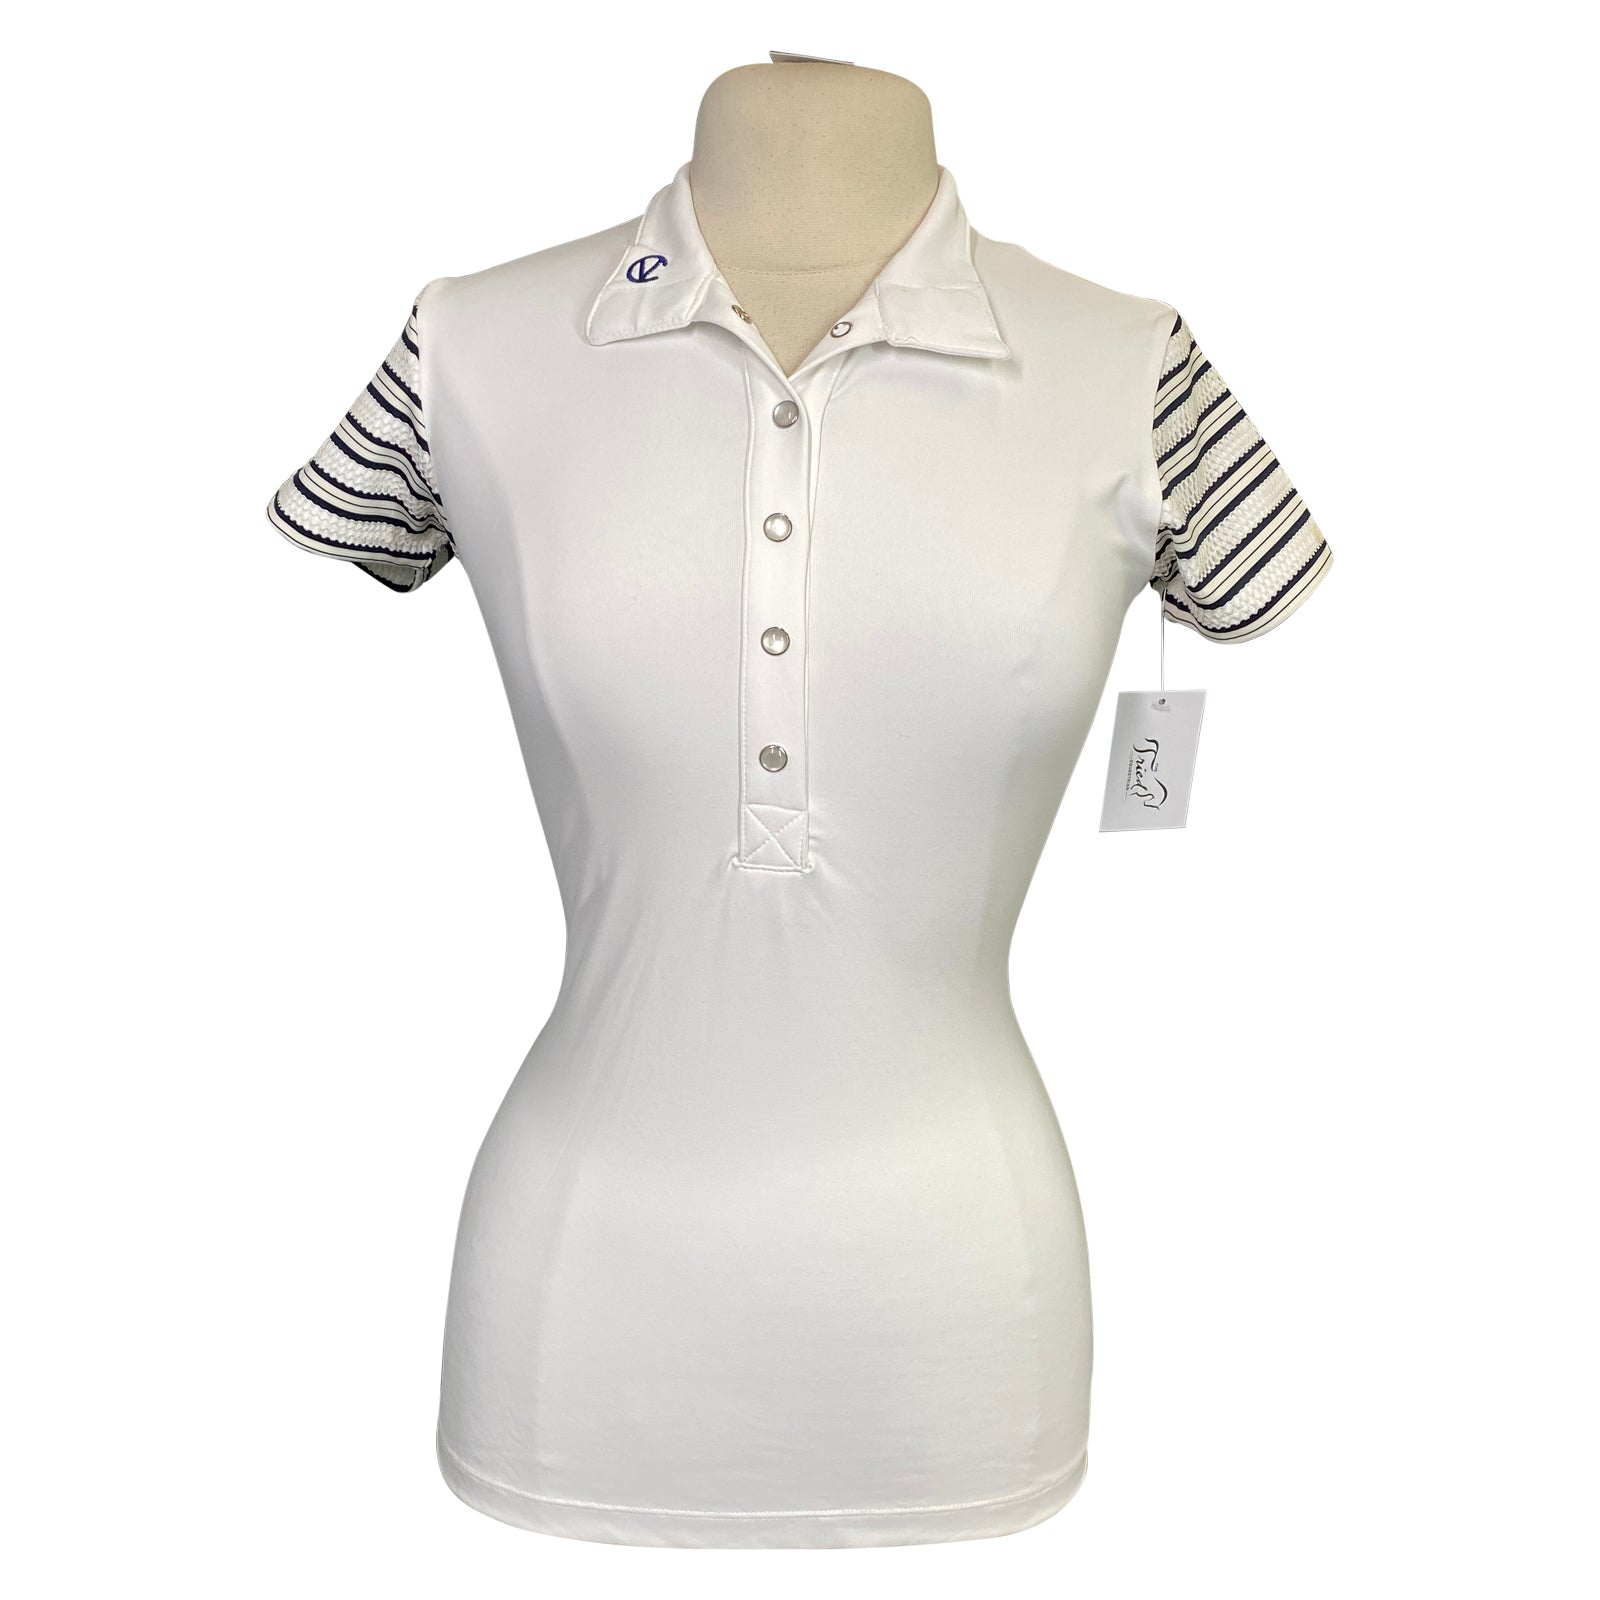 Calverro 'Short Stripe' Competition Shirt in White